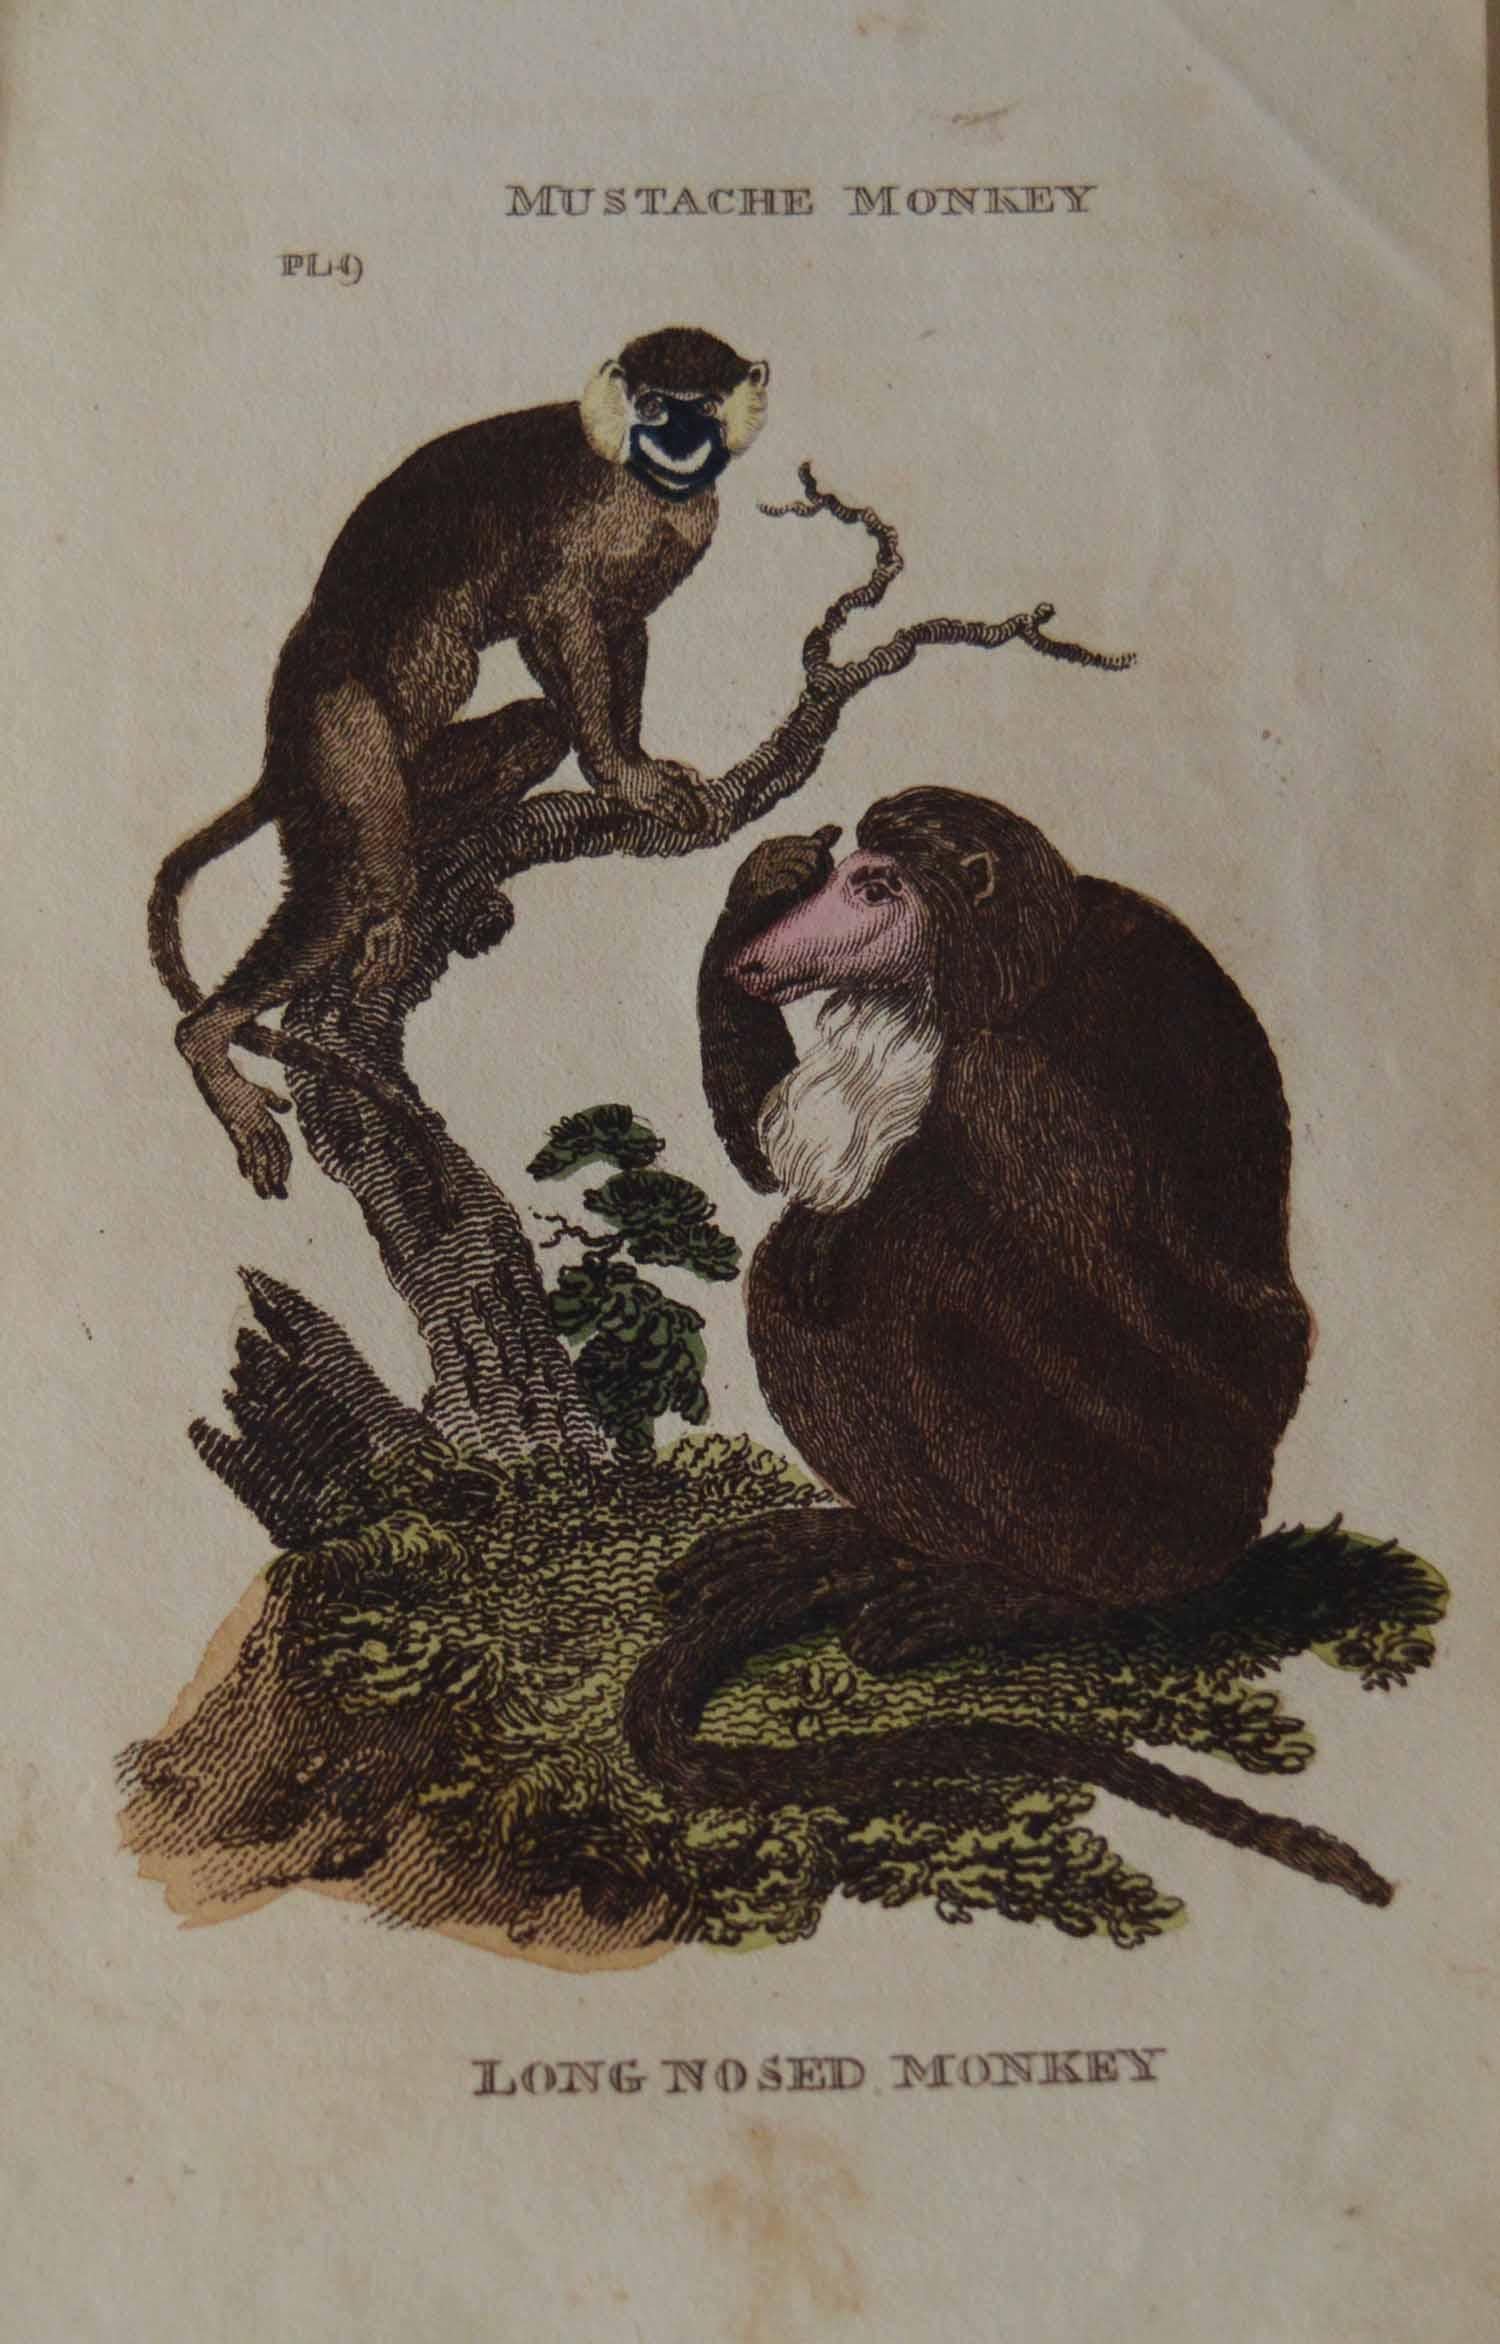 Paper Set of 15 Original Antique Prints of Monkey's, circa 1810